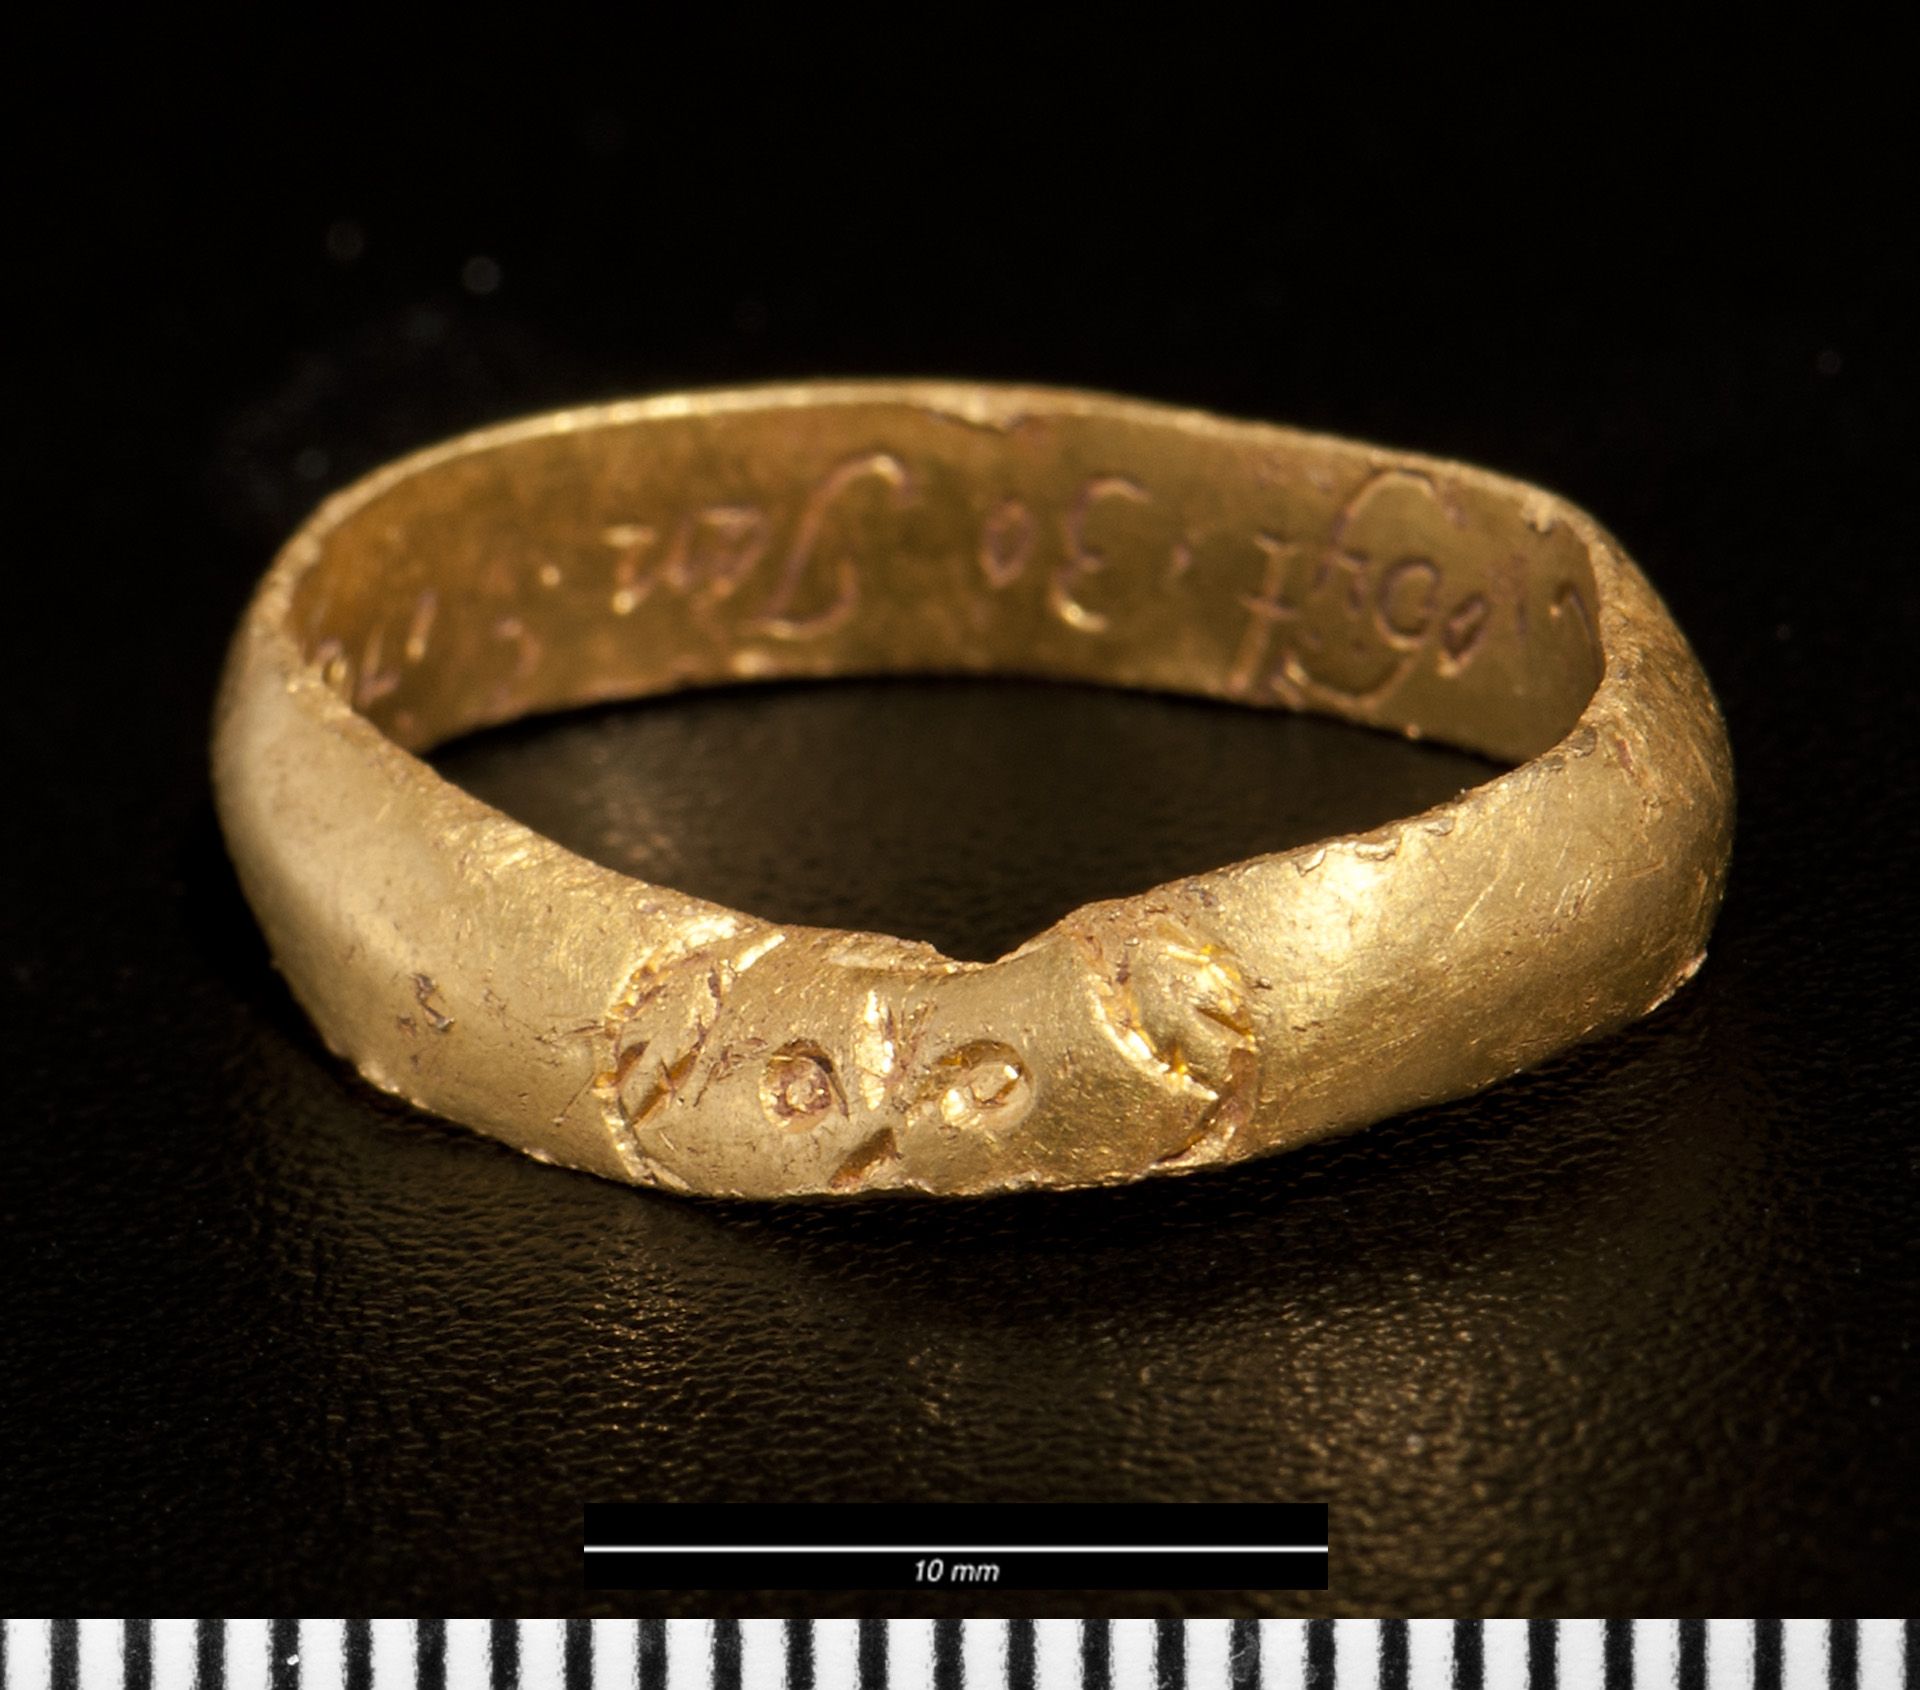 Mourning ring from Hundleton, Pembrokeshire